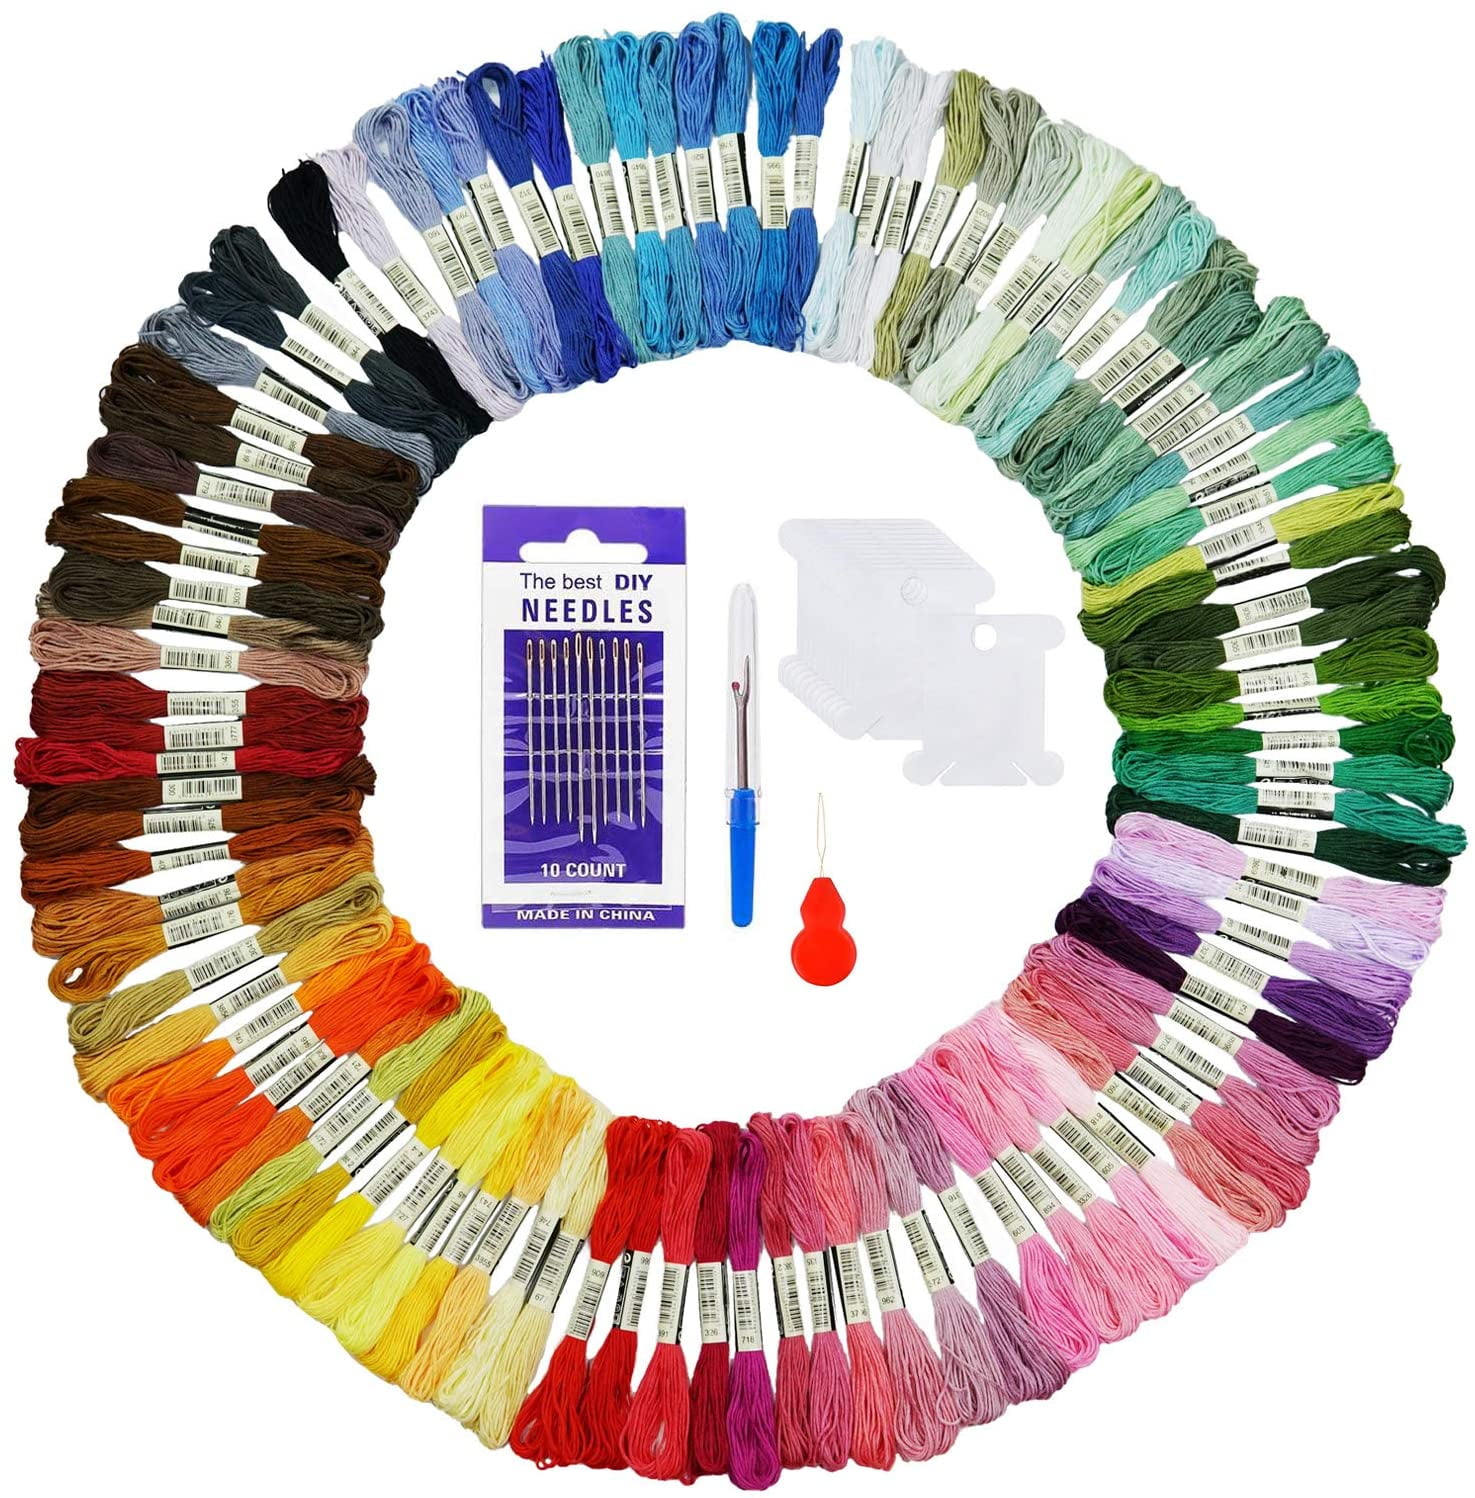 100 STRANDS PER PKG Salon Quality,36 colors available Wholesale-25 packages-36 inch-100%thai silk strands you pick your colors